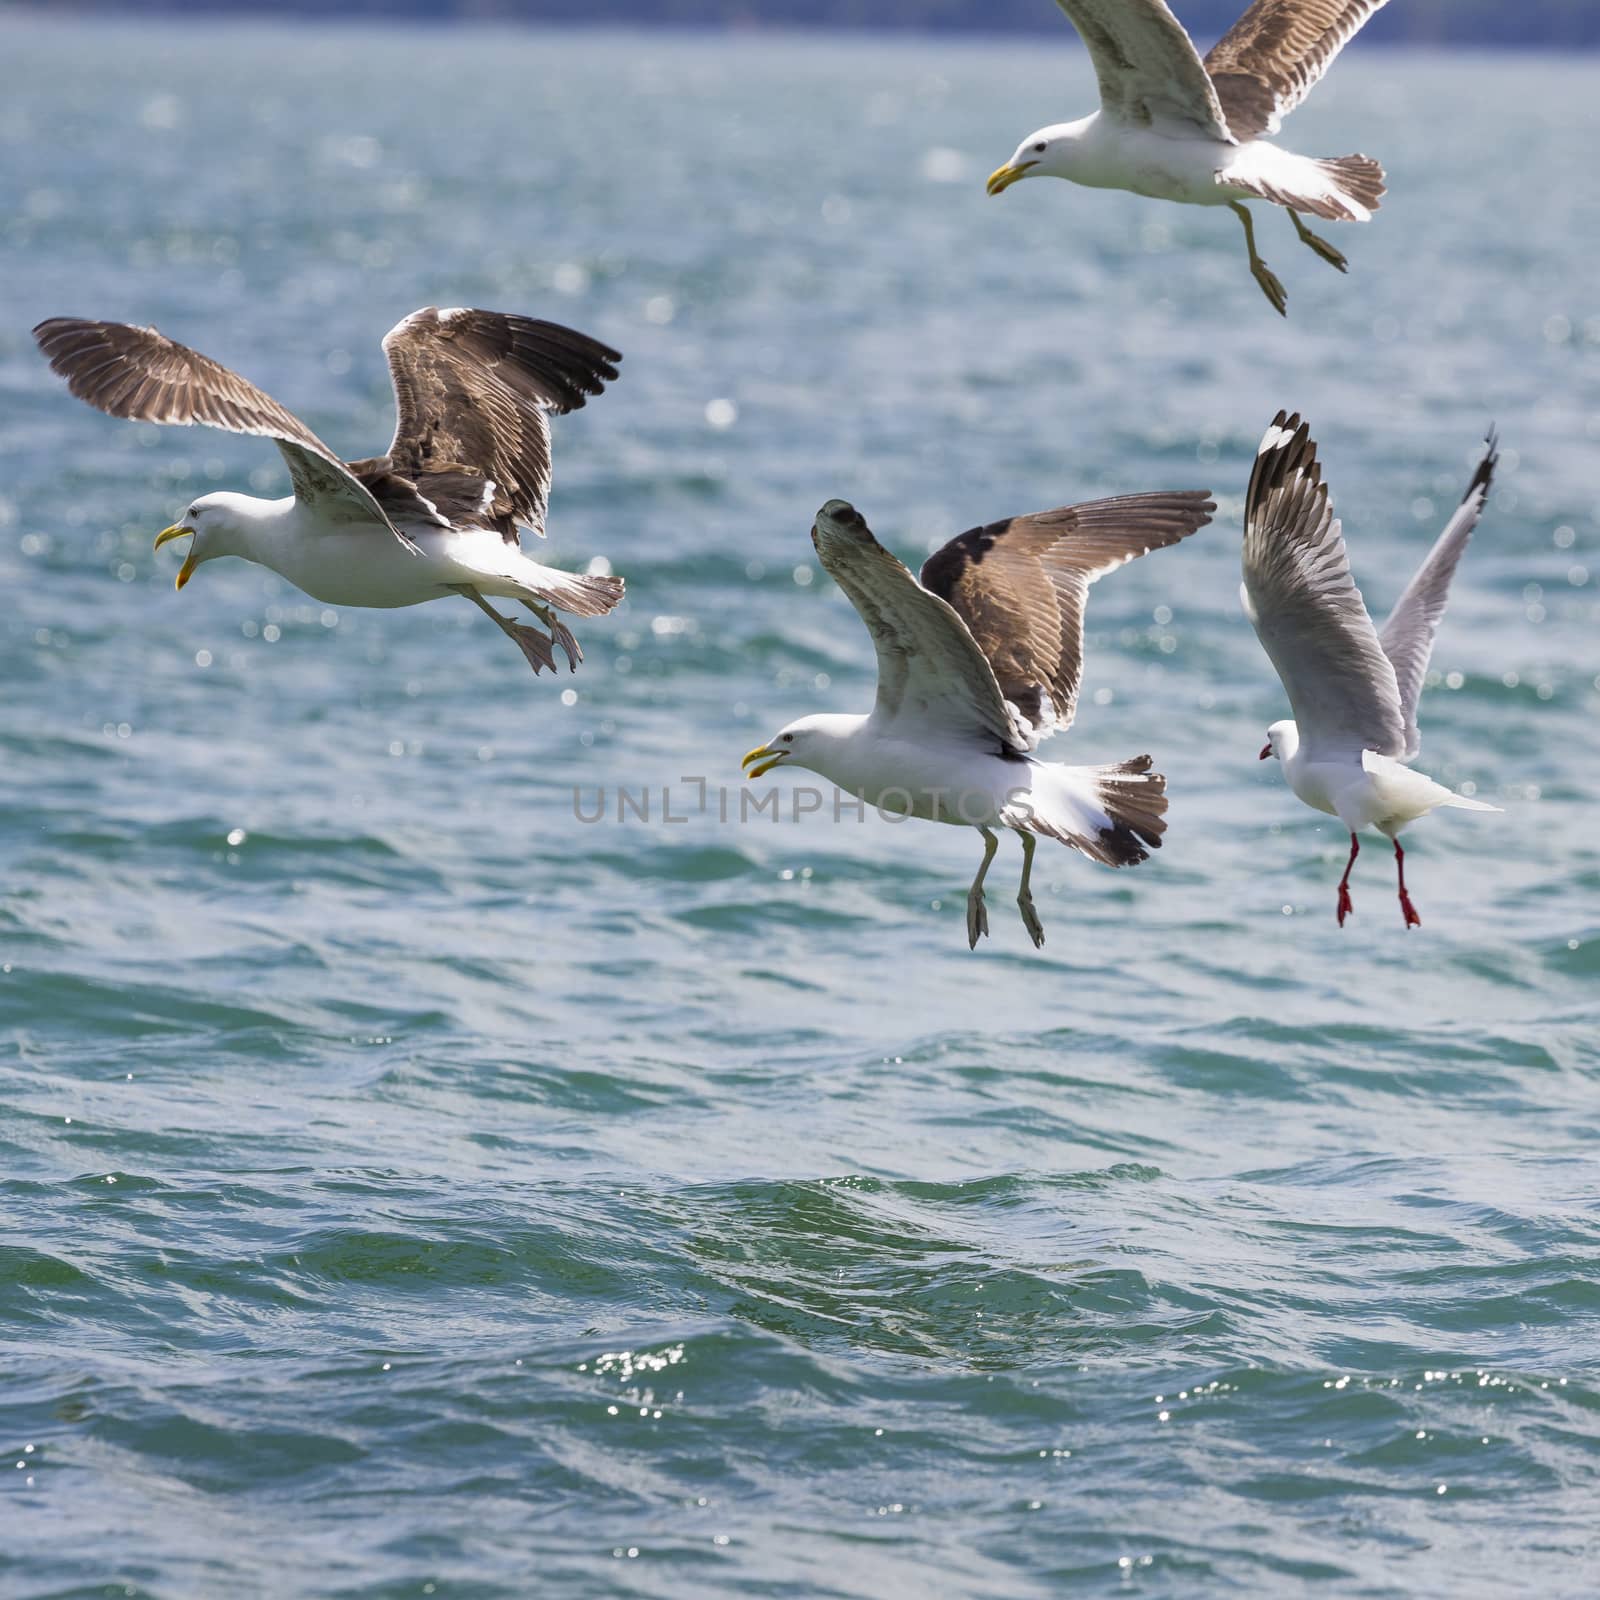 Sea Gull in New Zealand coast.

